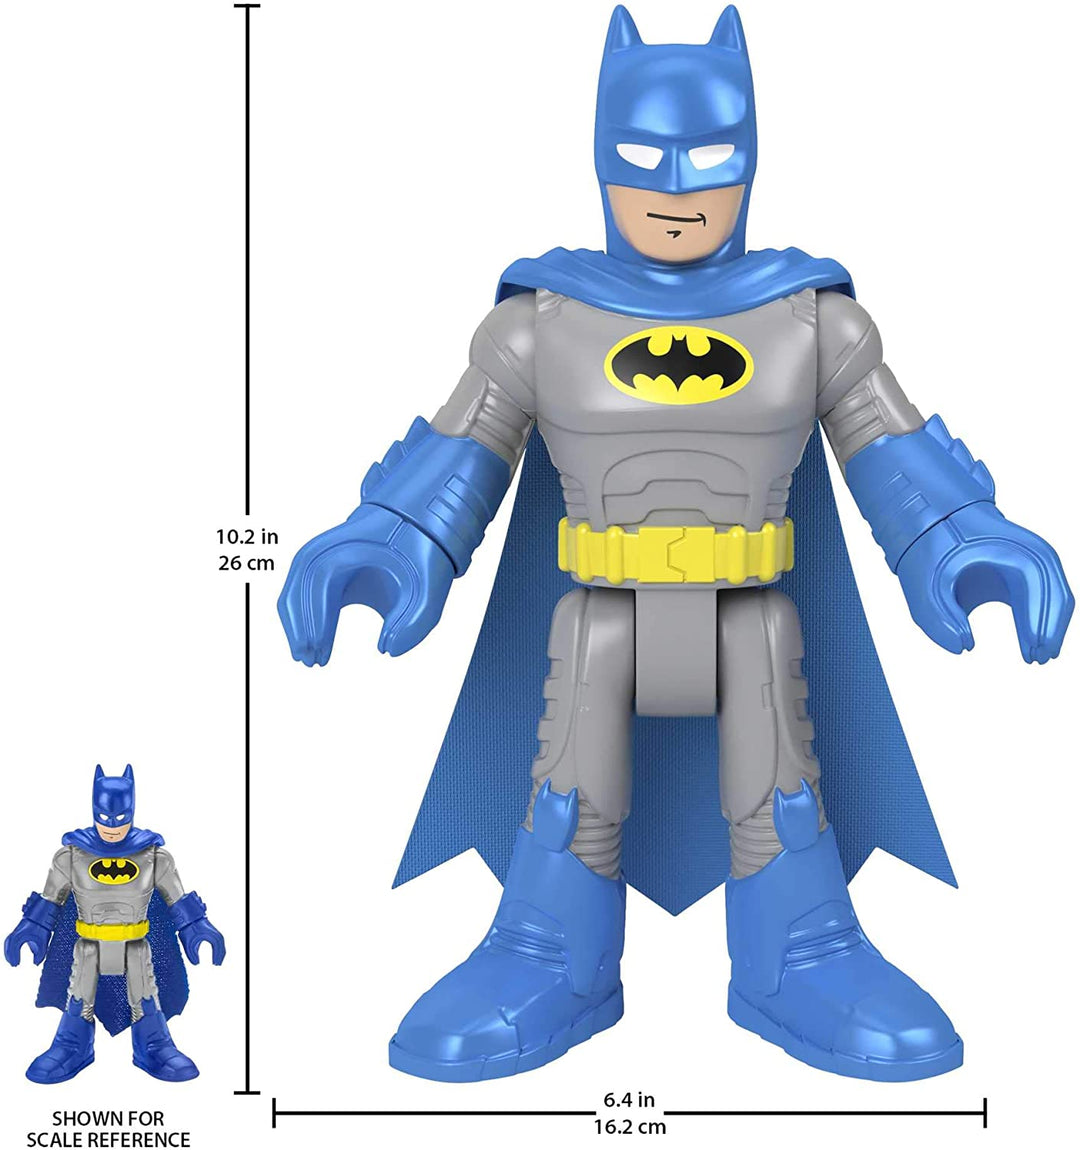 Fisher-Price Imaginext DC Super Friends Batman XL - Blau